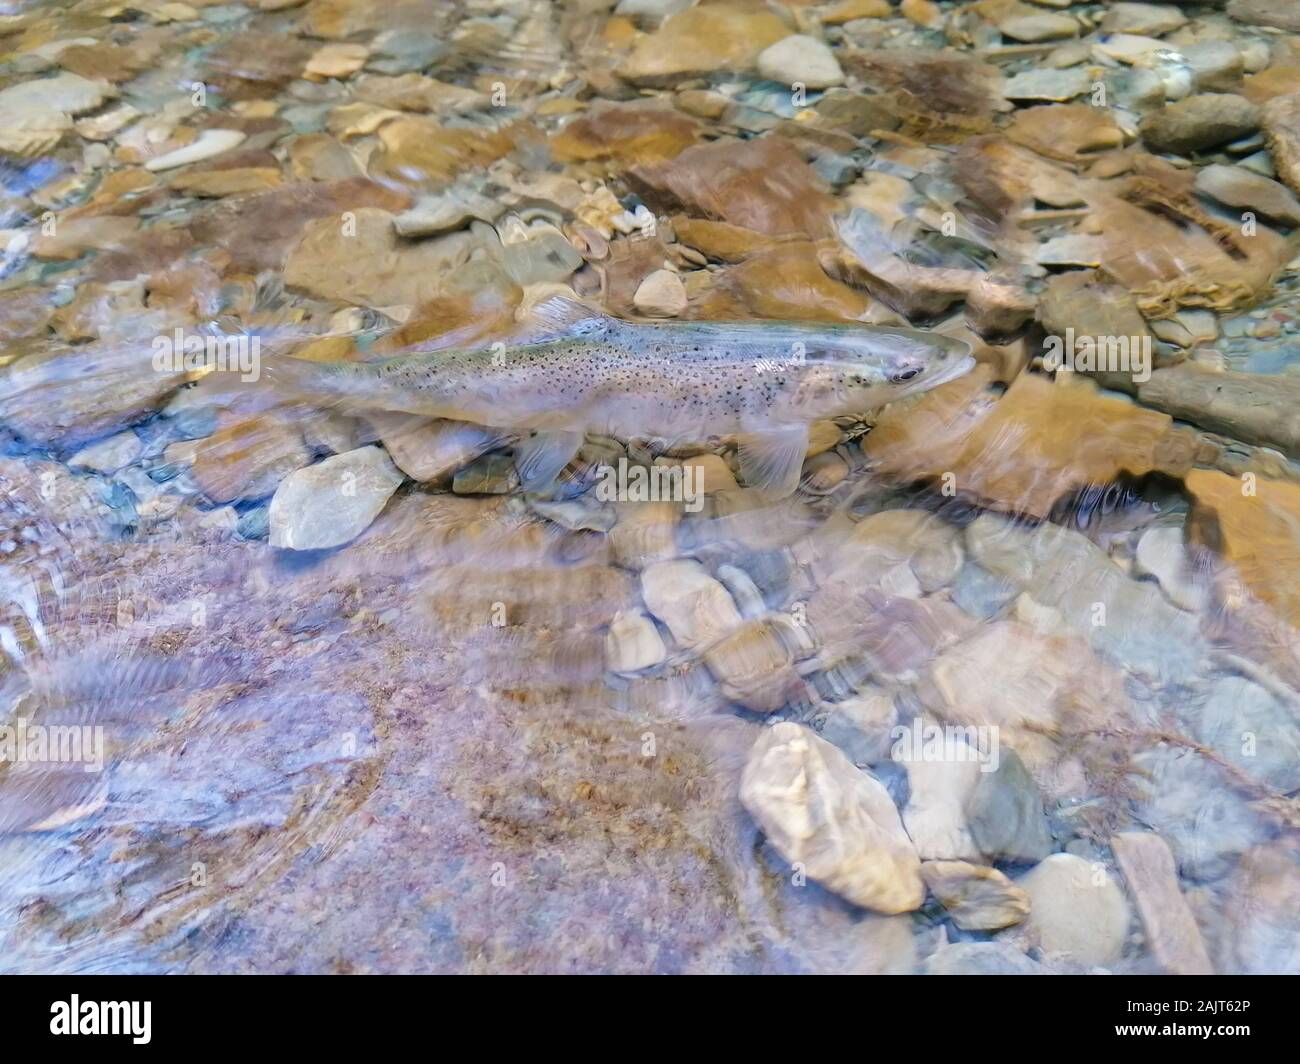 Wild brown trout, Salmo trutta, swimming in a river small stream in clean shallow water. Stock Photo